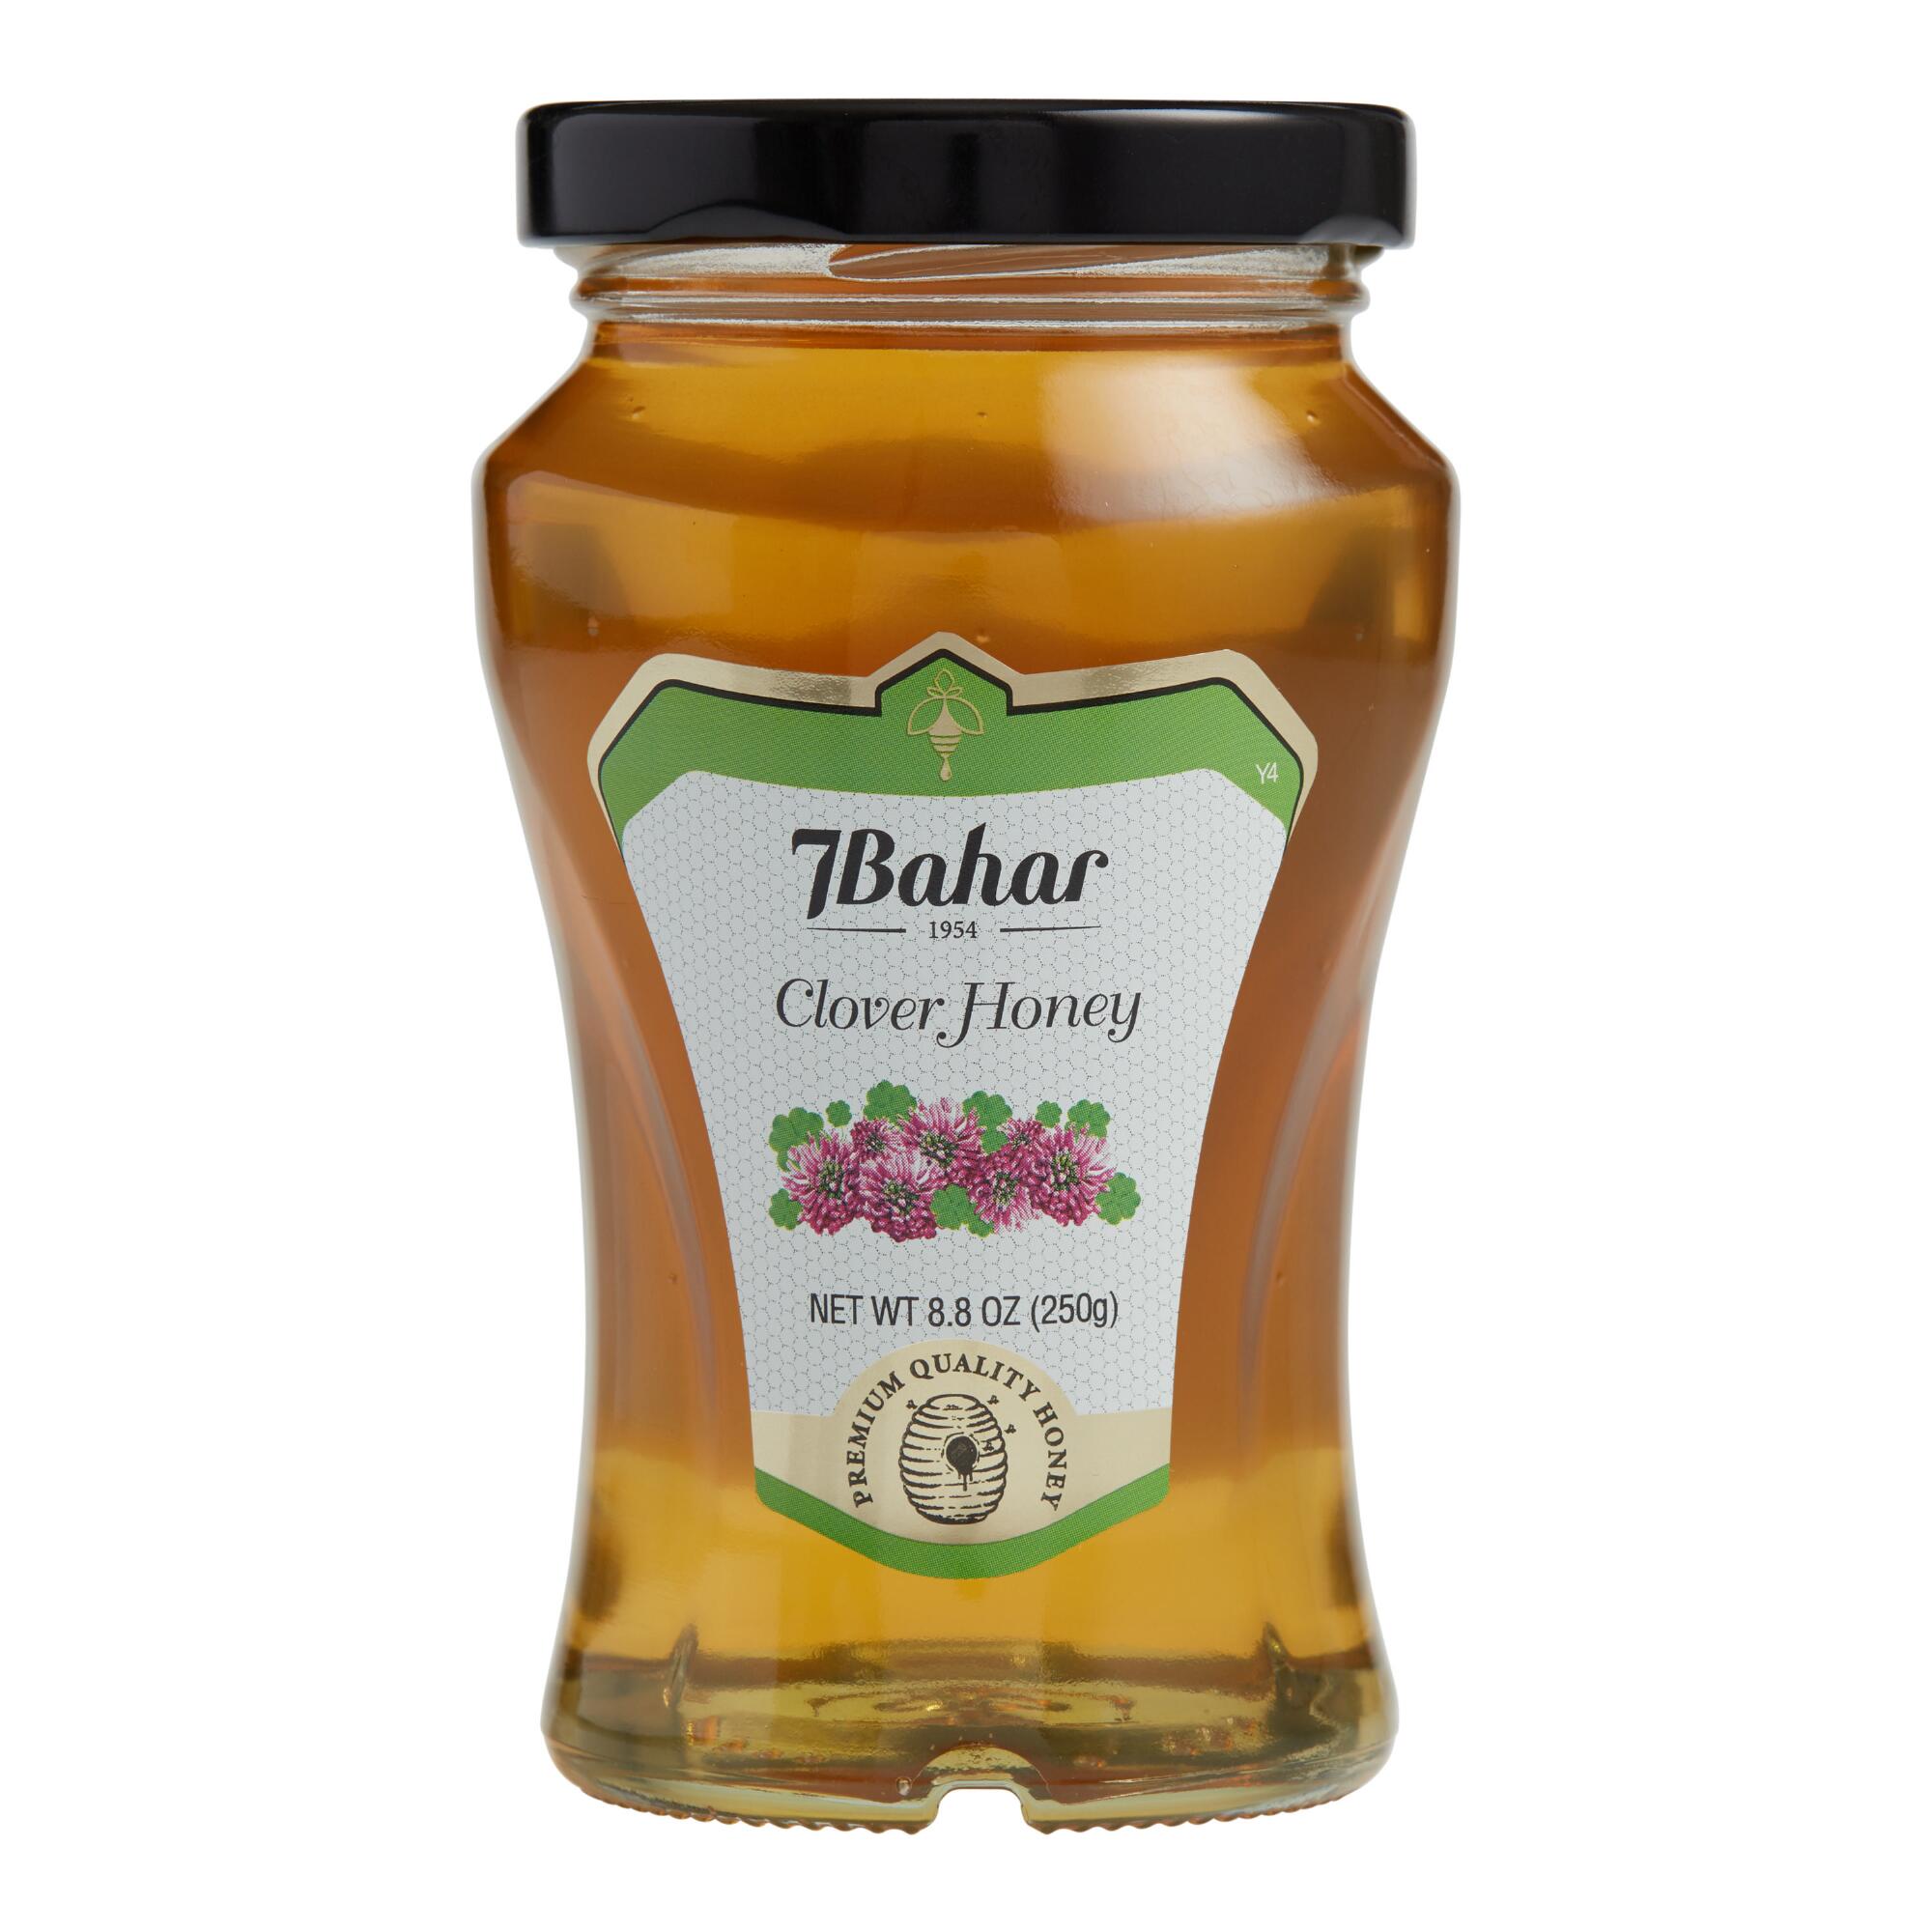 7Bahar Clover Honey by World Market